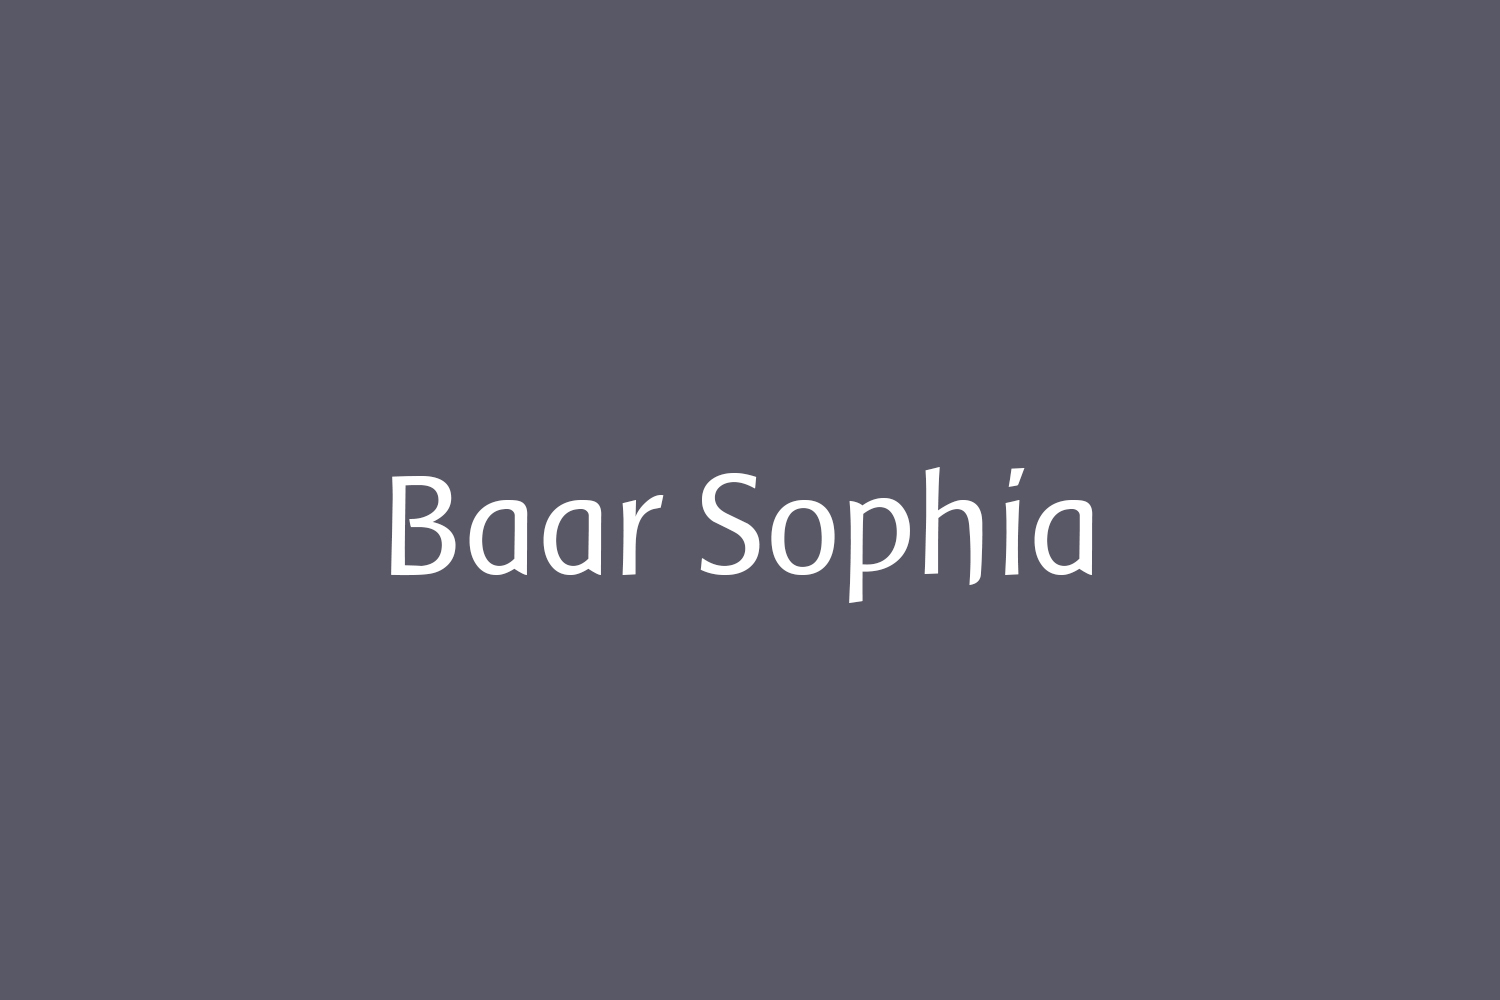 Baar Sophia Free Font